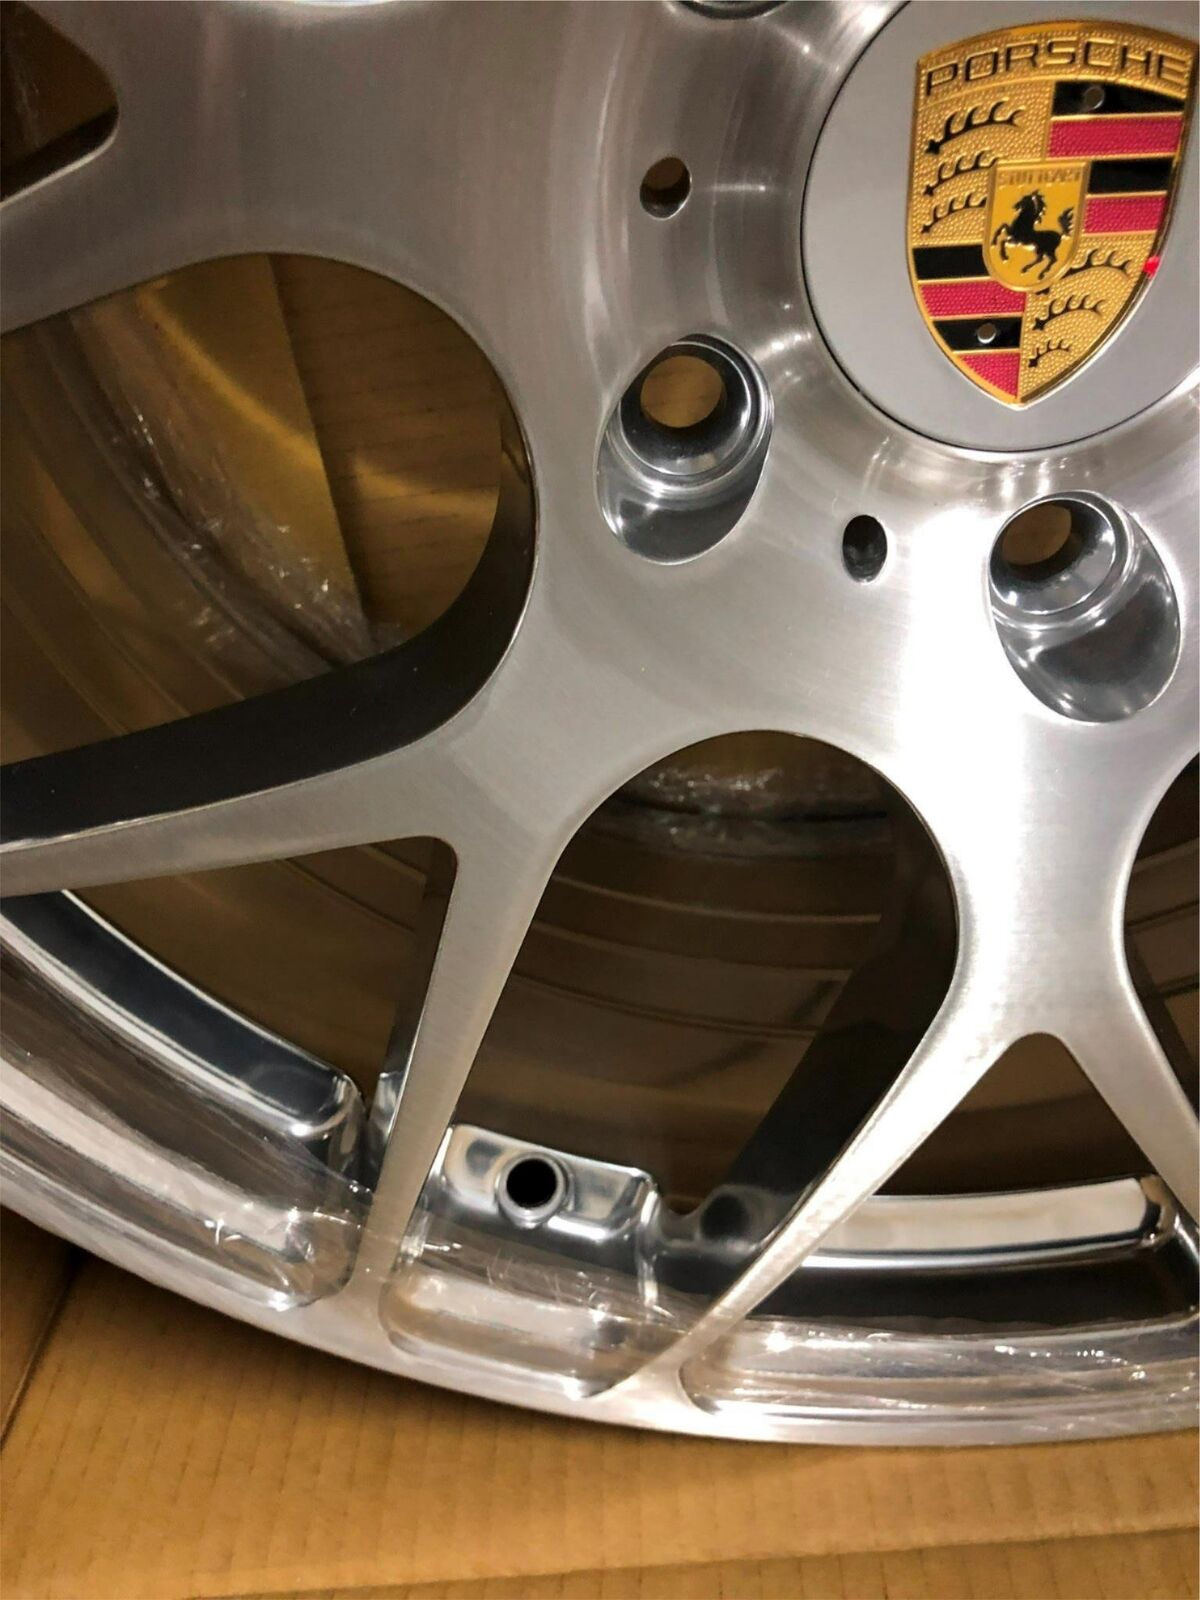 19-inch Ruger Forged Custom Wheels Fit Porsche 911 Carrera 996 997 991 5x130 Lug